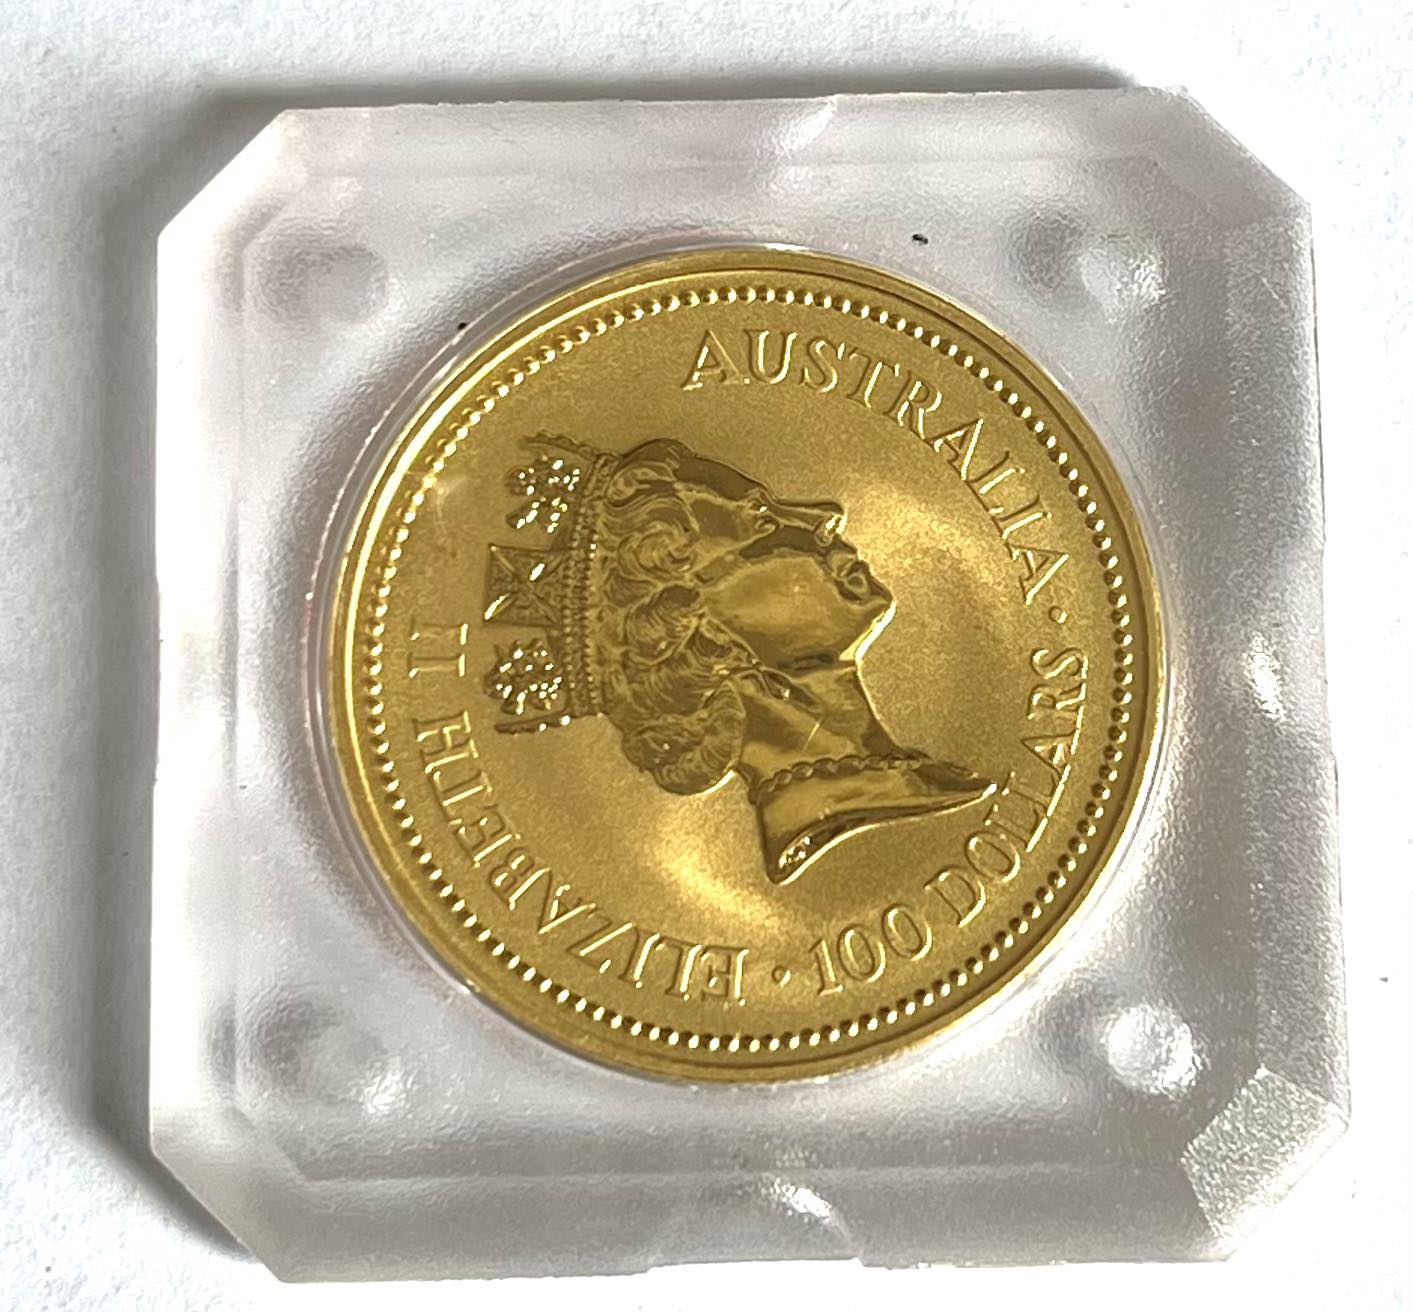 1990 Australia 1 oz Gold Nugget BU in Capsule